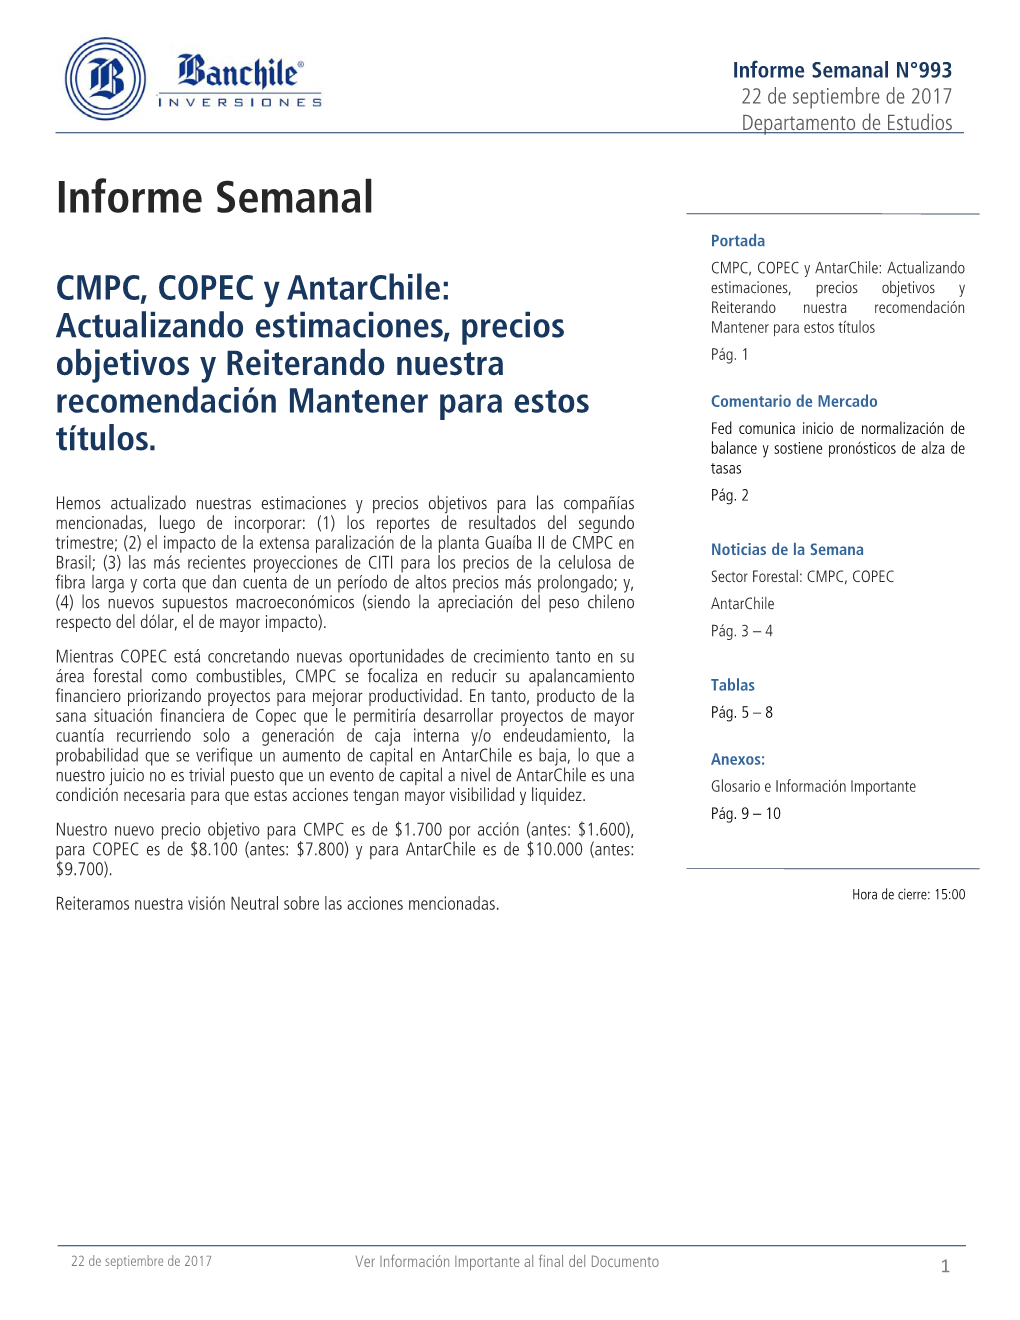 Informe Semanal CMPC, COPEC Y Antarchile